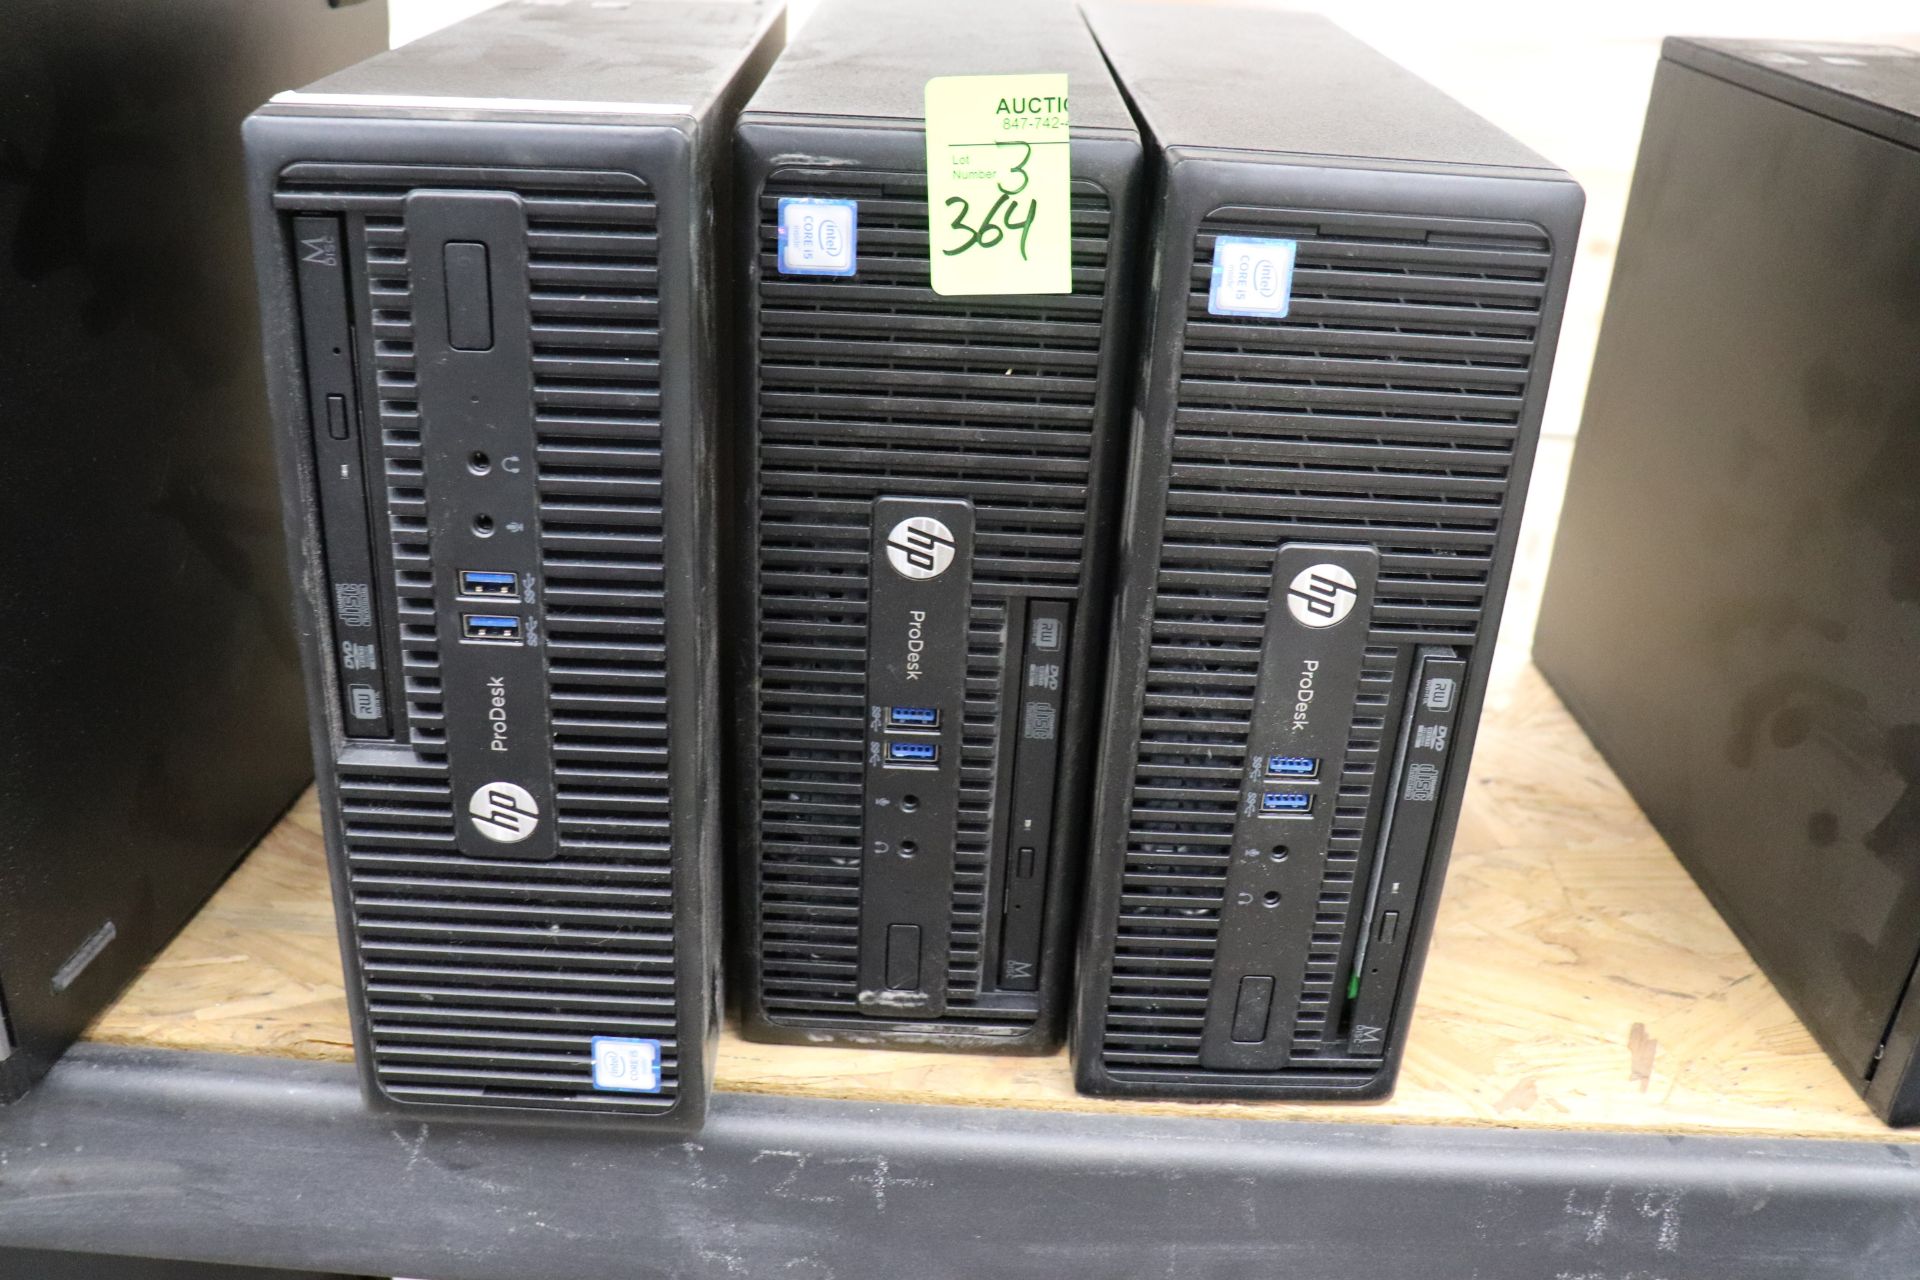 Three HP desktop computers, model ProDesk 400G3SFF Business